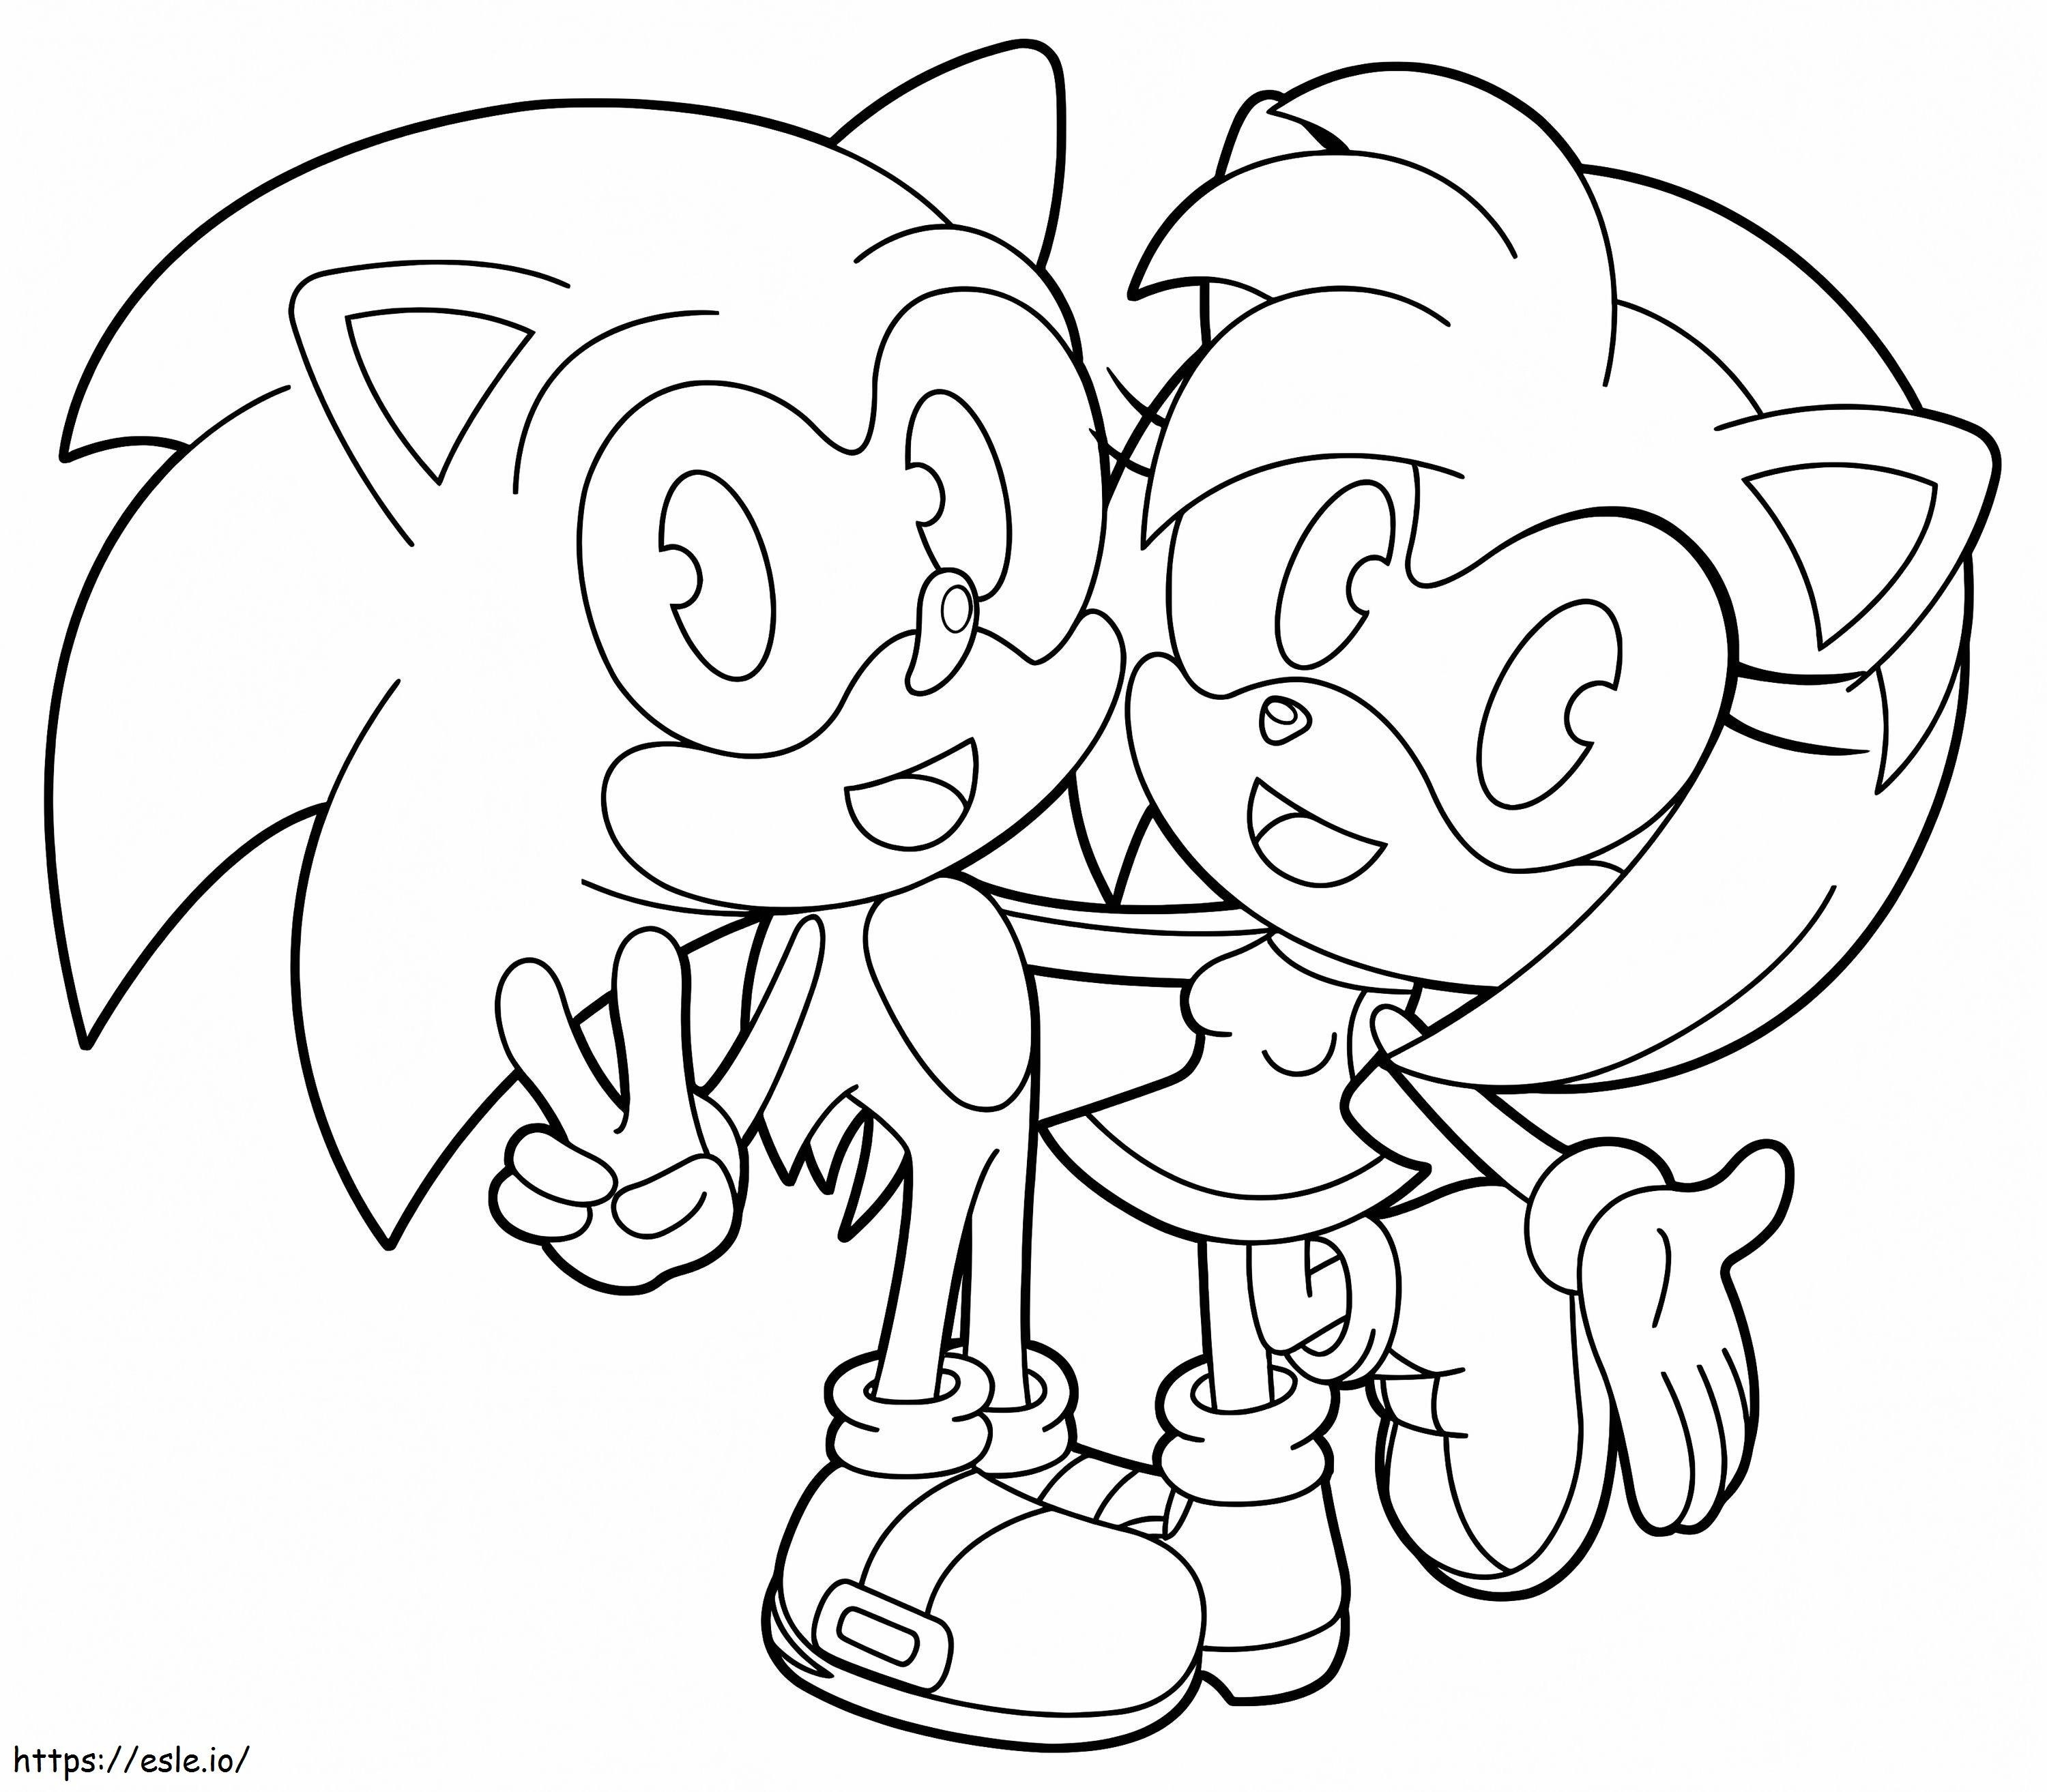 Amy Rose e Sonic para colorir